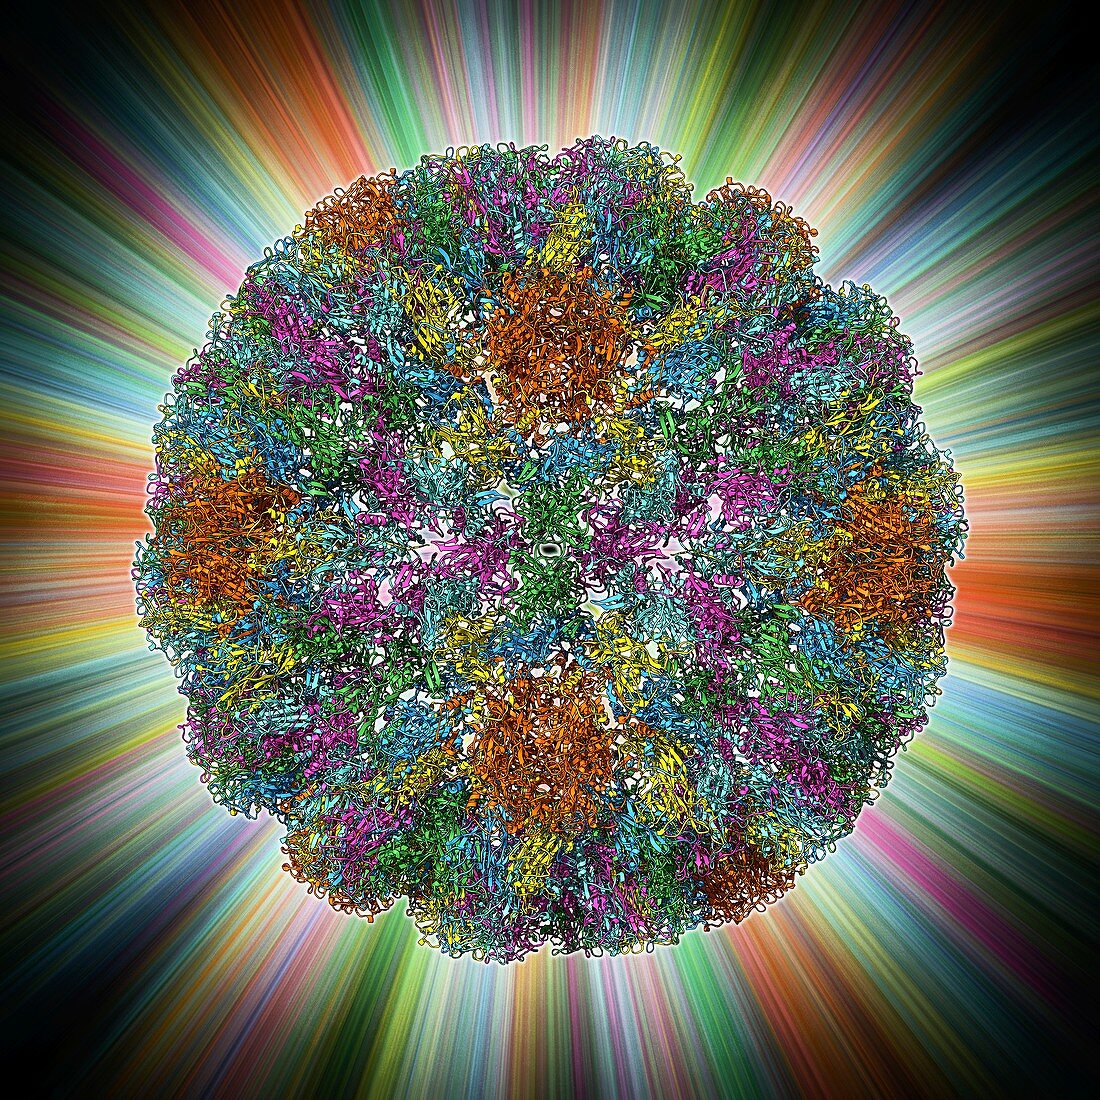 SV40 virus capsid,molecular model